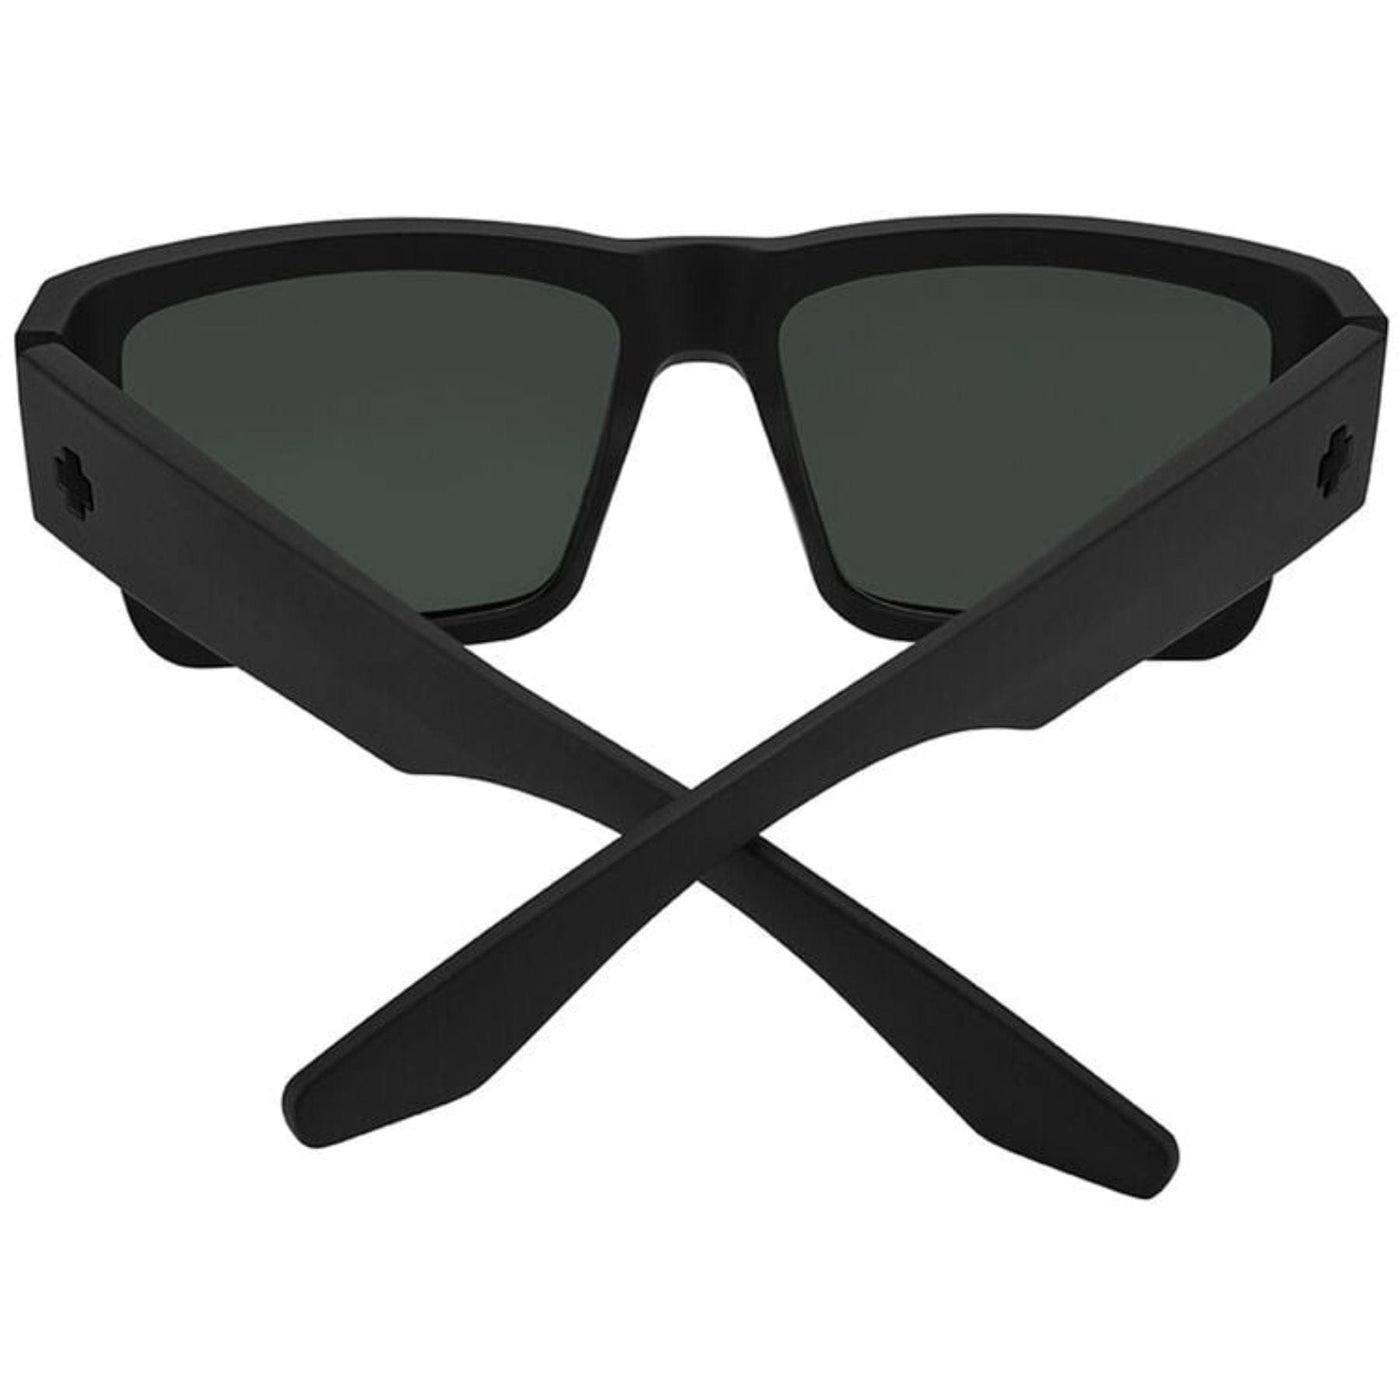 SPY CYRUS Polarized Sunglasses, Happy BOOST - Black 8Lines Shop - Fast Shipping